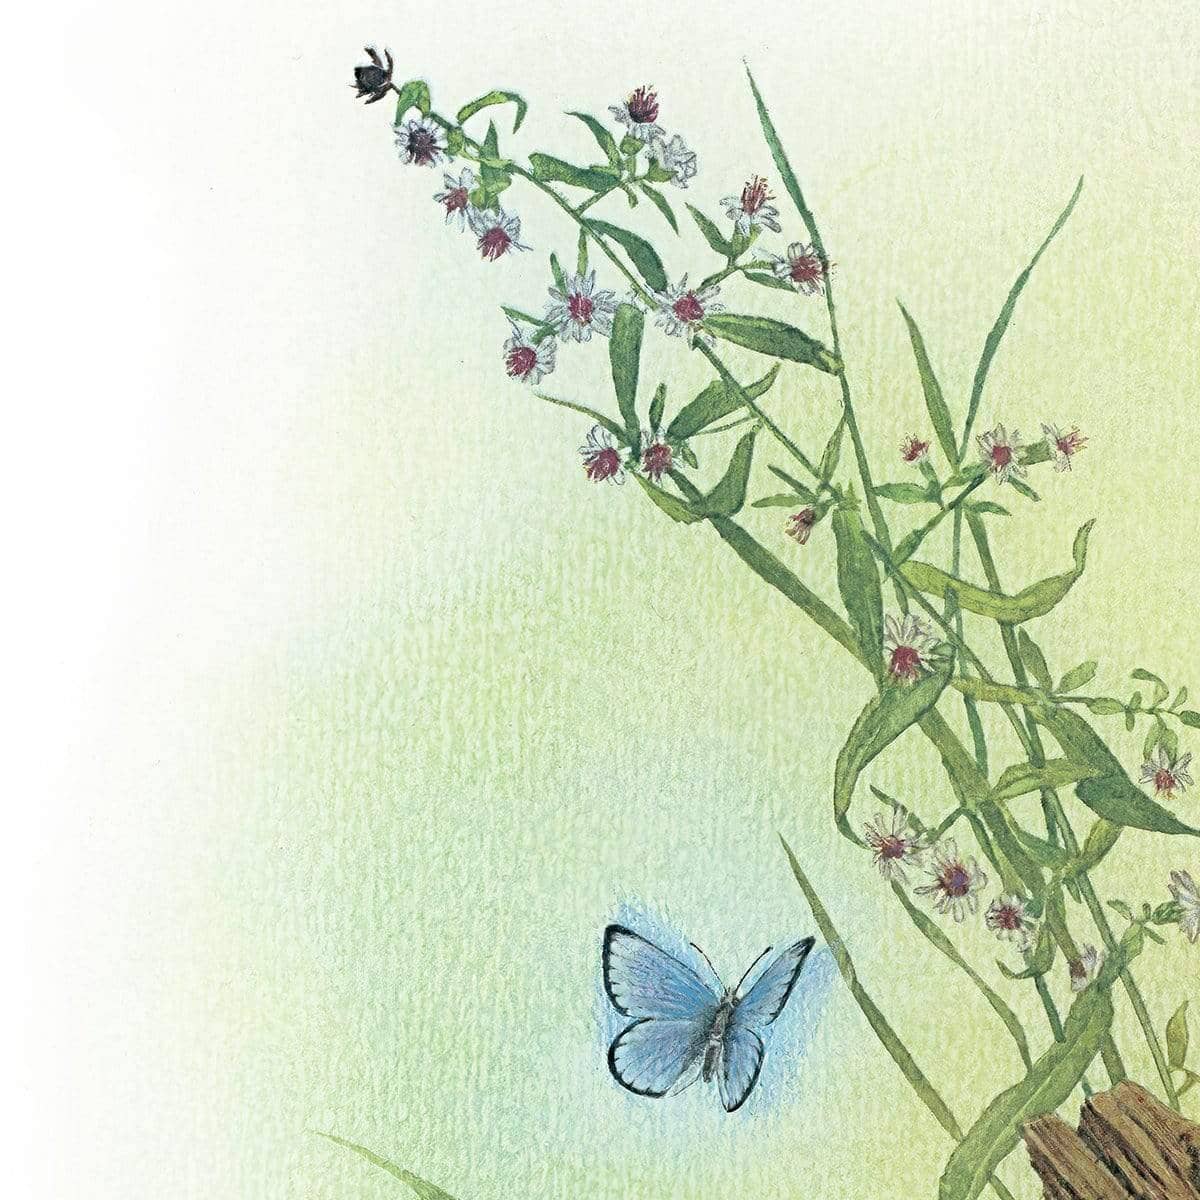 Chipmunk and Woodland Blue Butterfly Enhanced - Framed Print | Artwork by Glen Loates